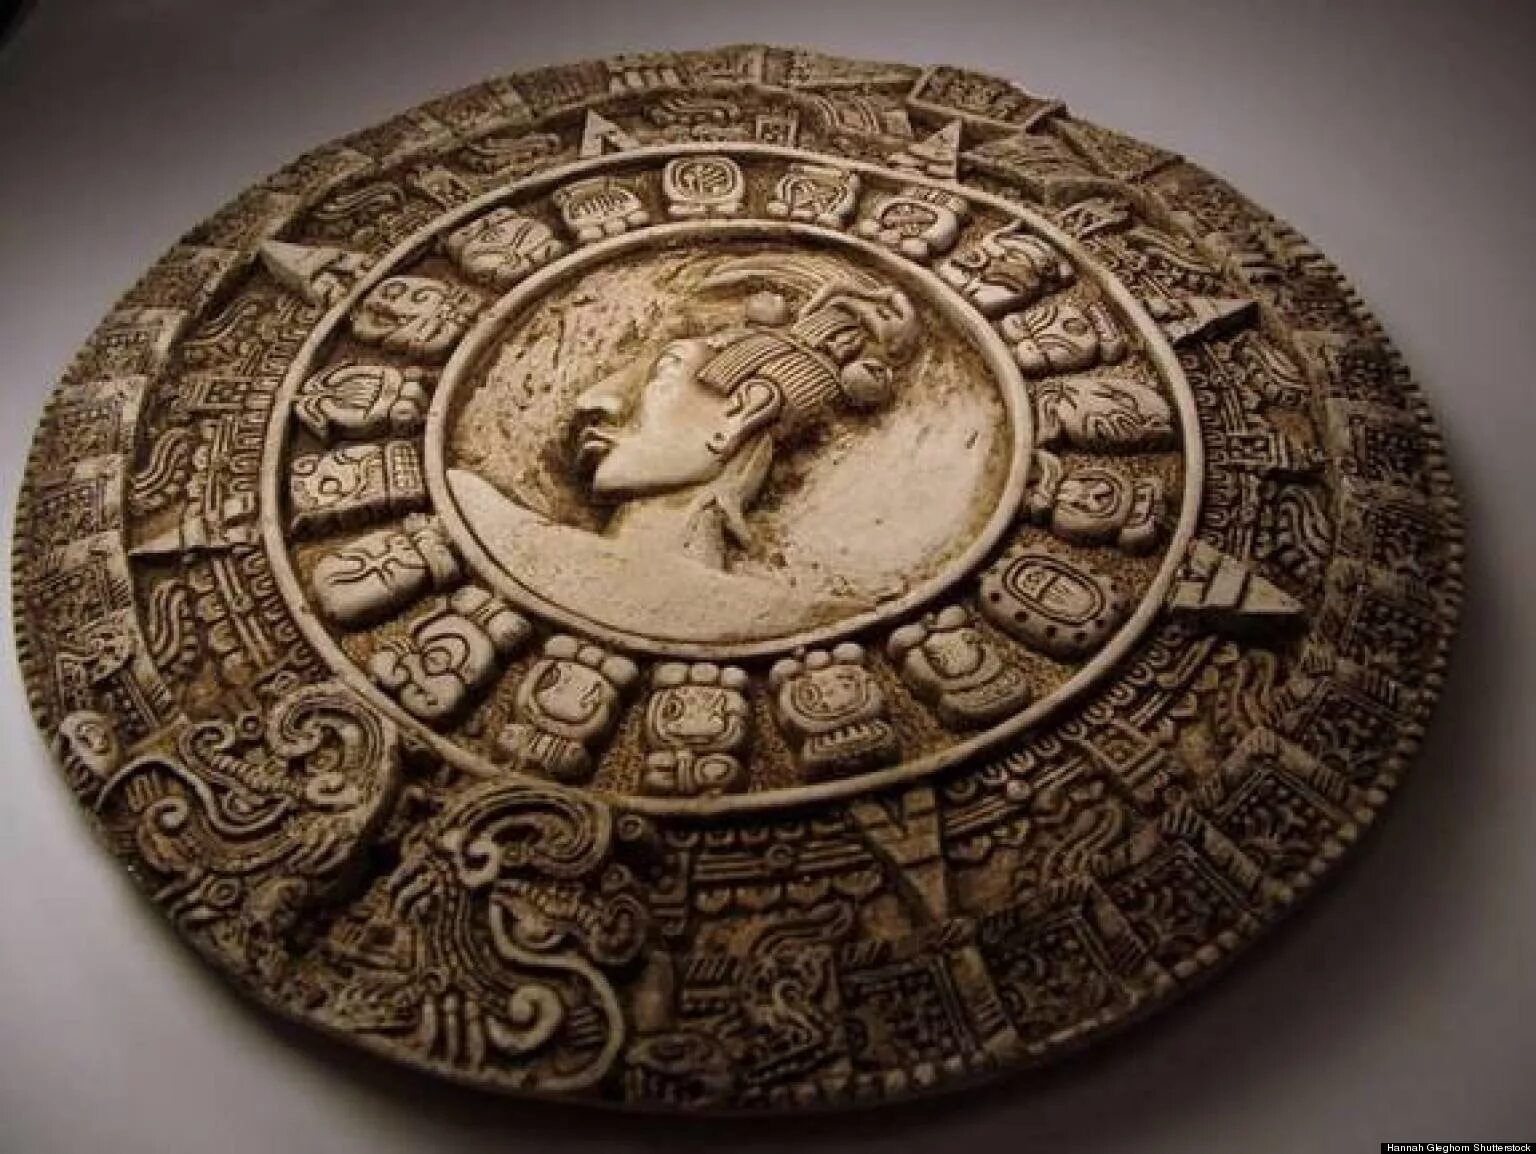 Календарь ма й я слушать. Хааб – Солнечный календарь Майя. Камень солнца ацтеков. Календарный круг Майя. Древний календарь Майя.